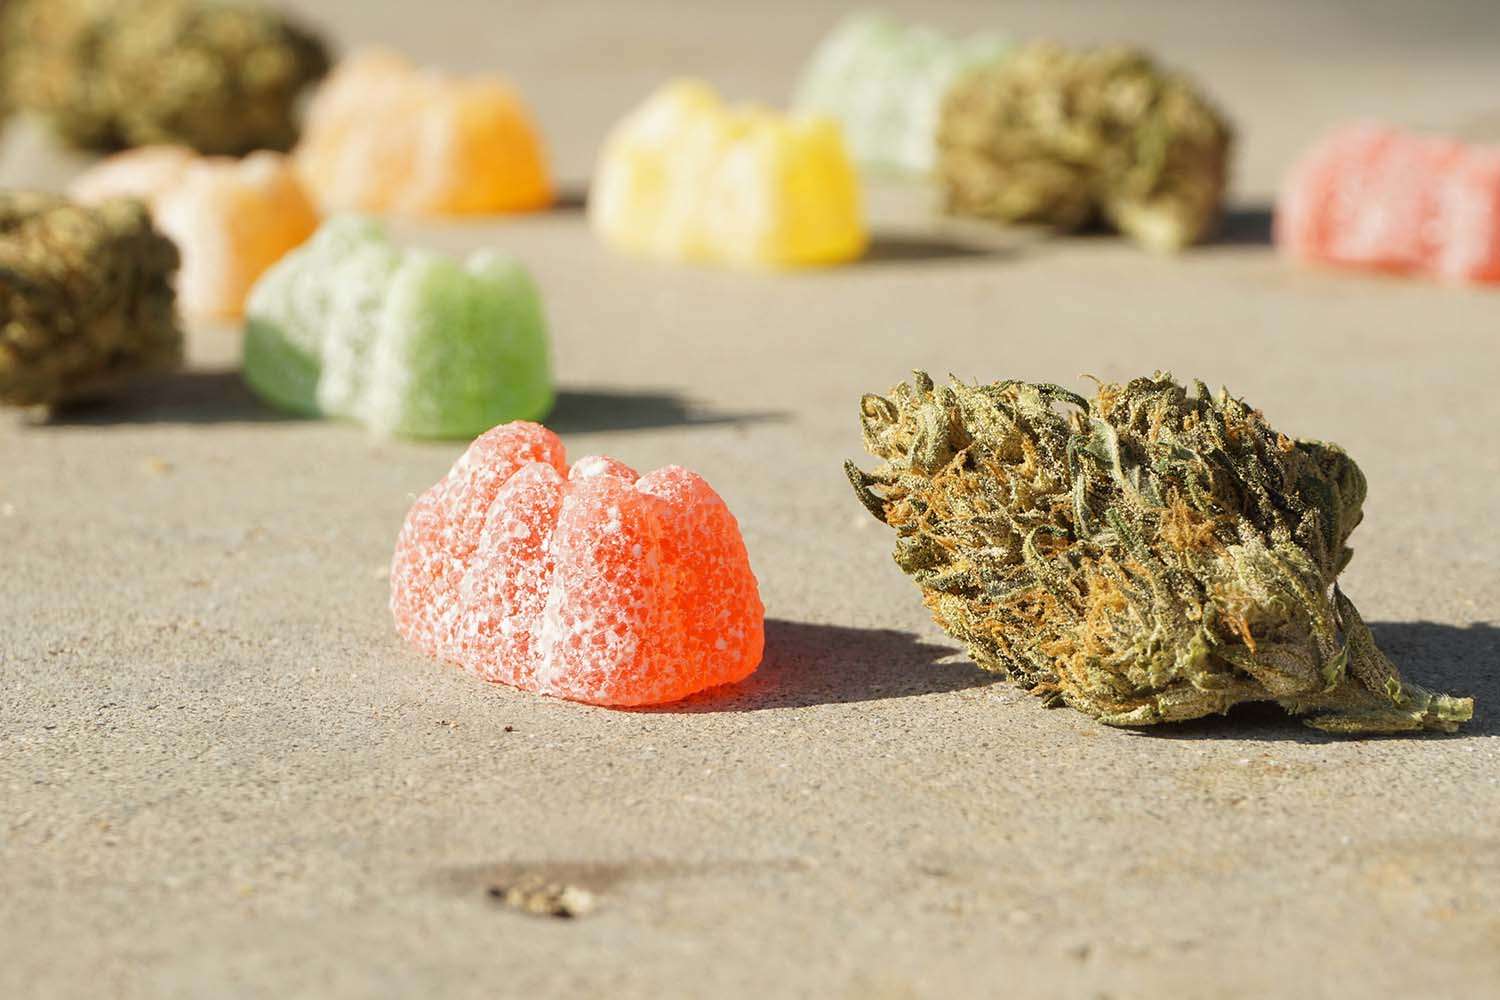 Marijuana edibles and cannabis buds